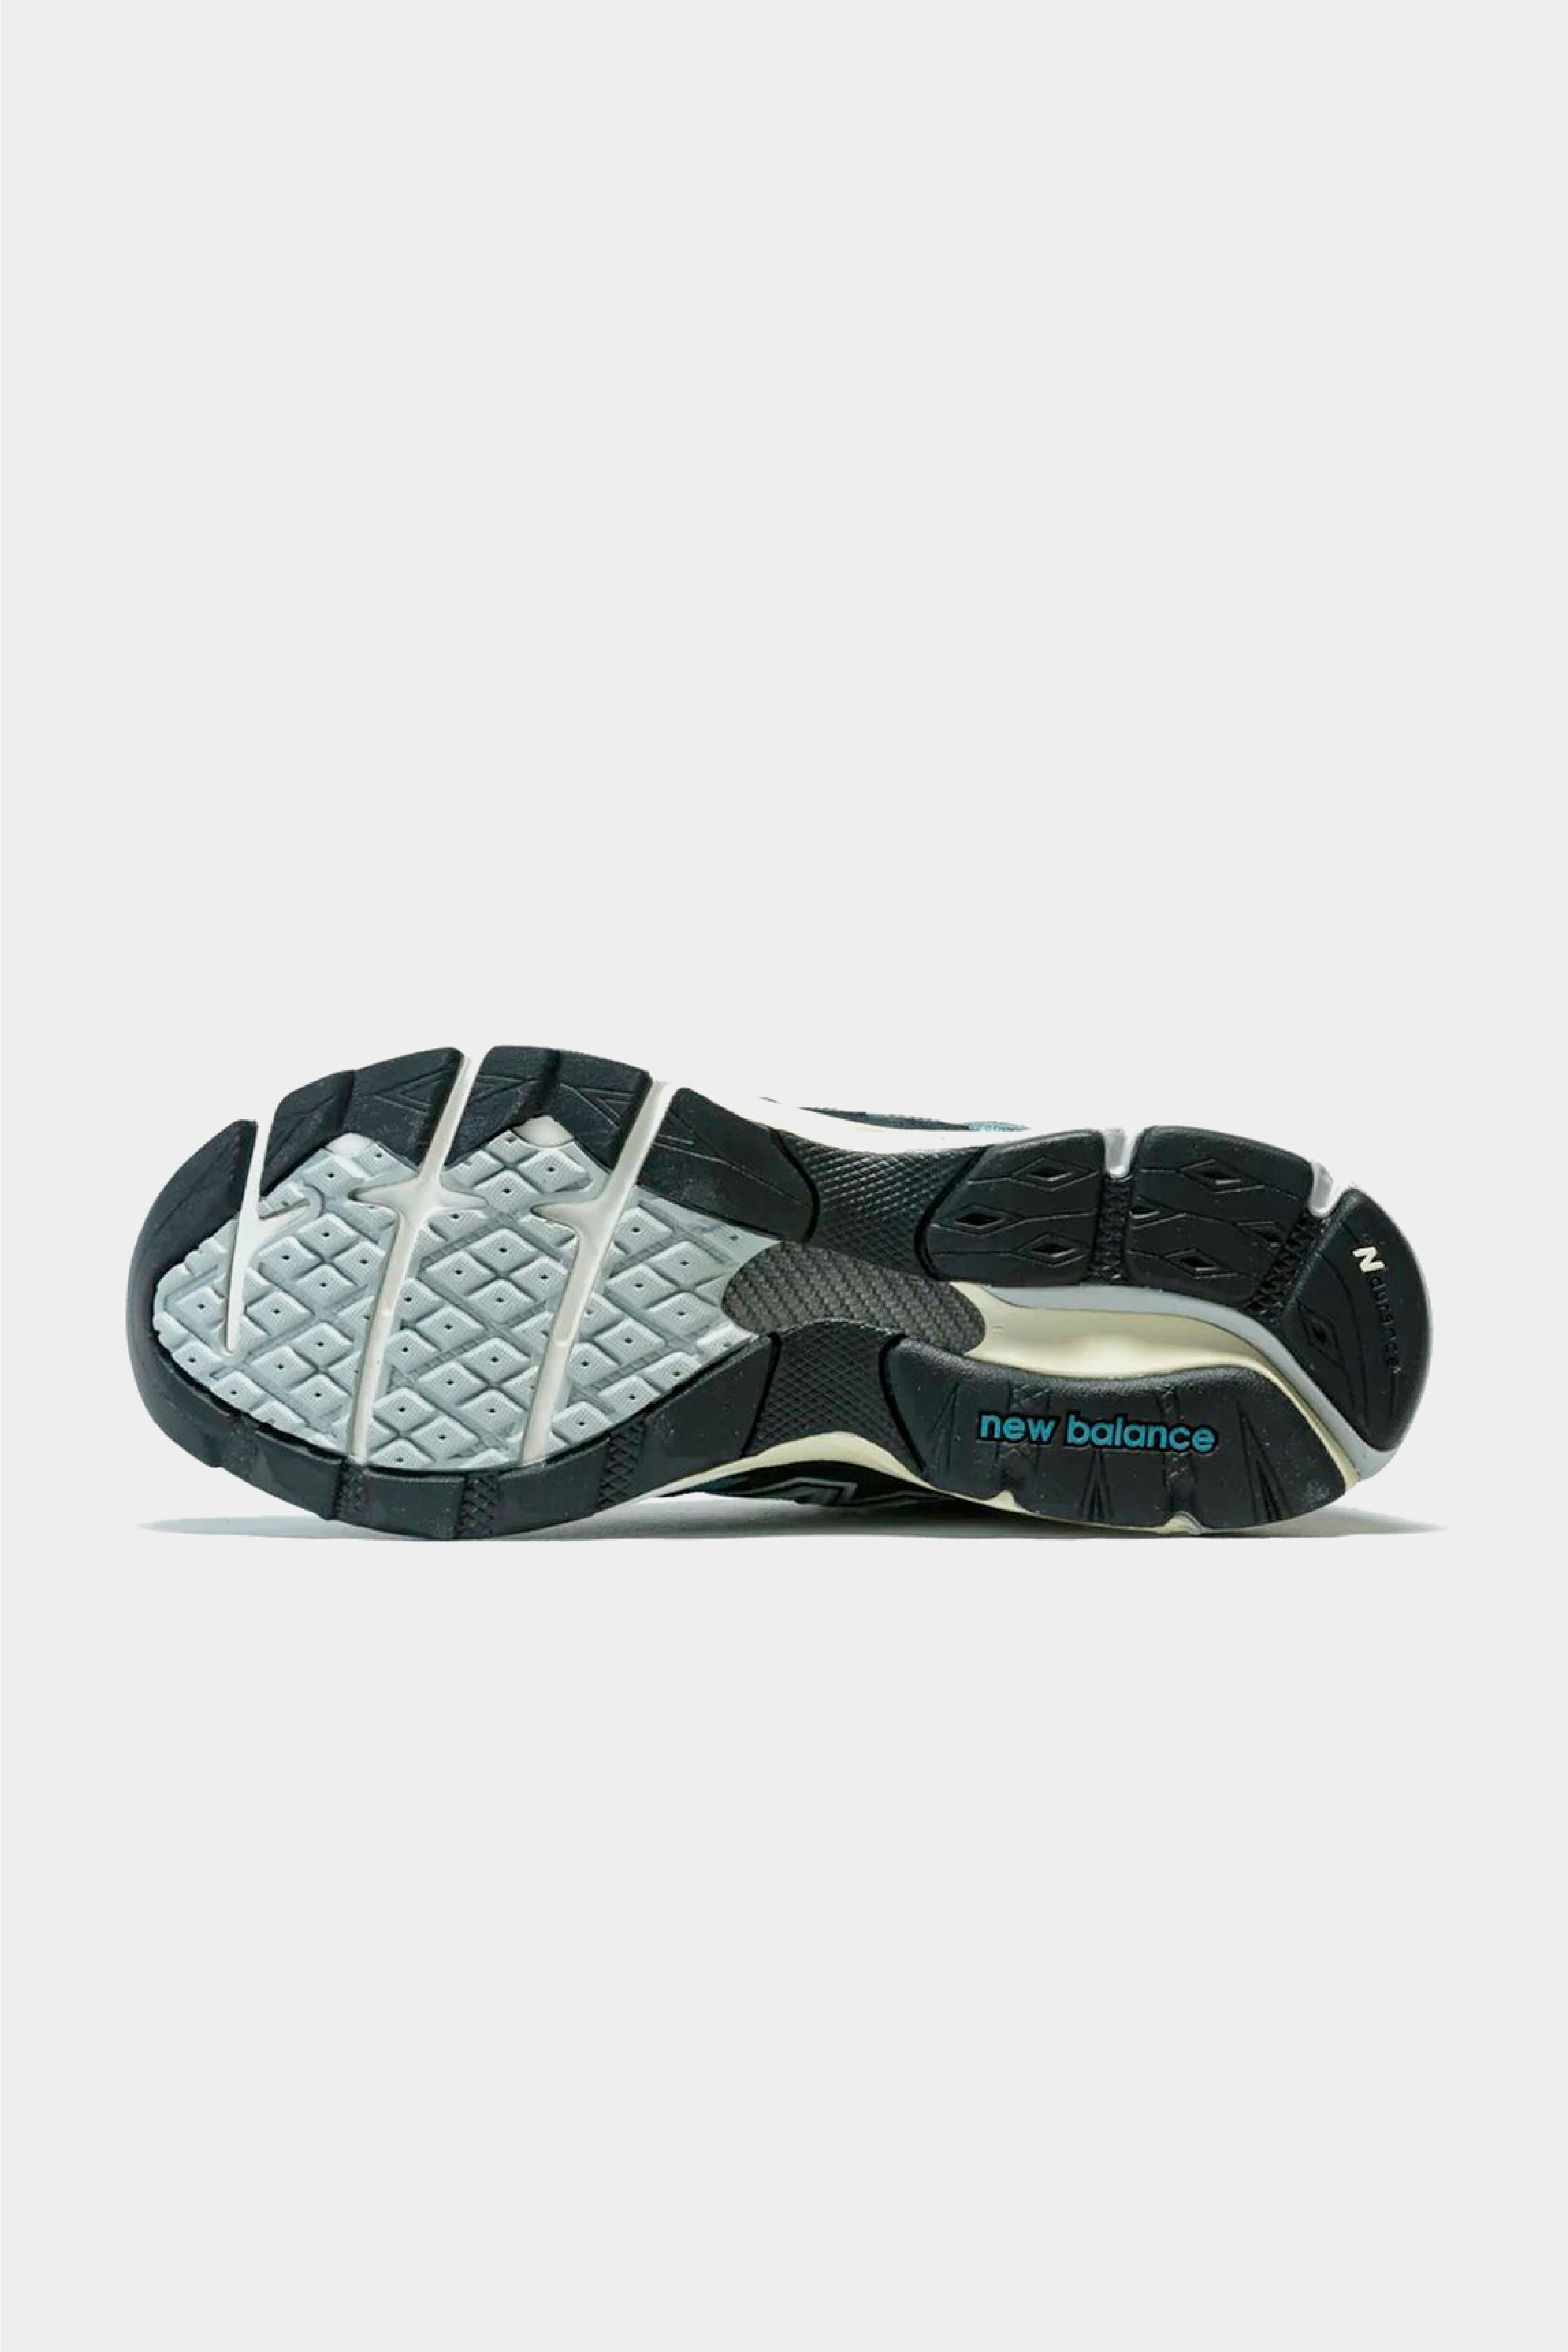 Selectshop FRAME - NEW BALANCE 990v3 Made In USA "Teddy Santis Navy Castlerock" Footwear Concept Store Dubai